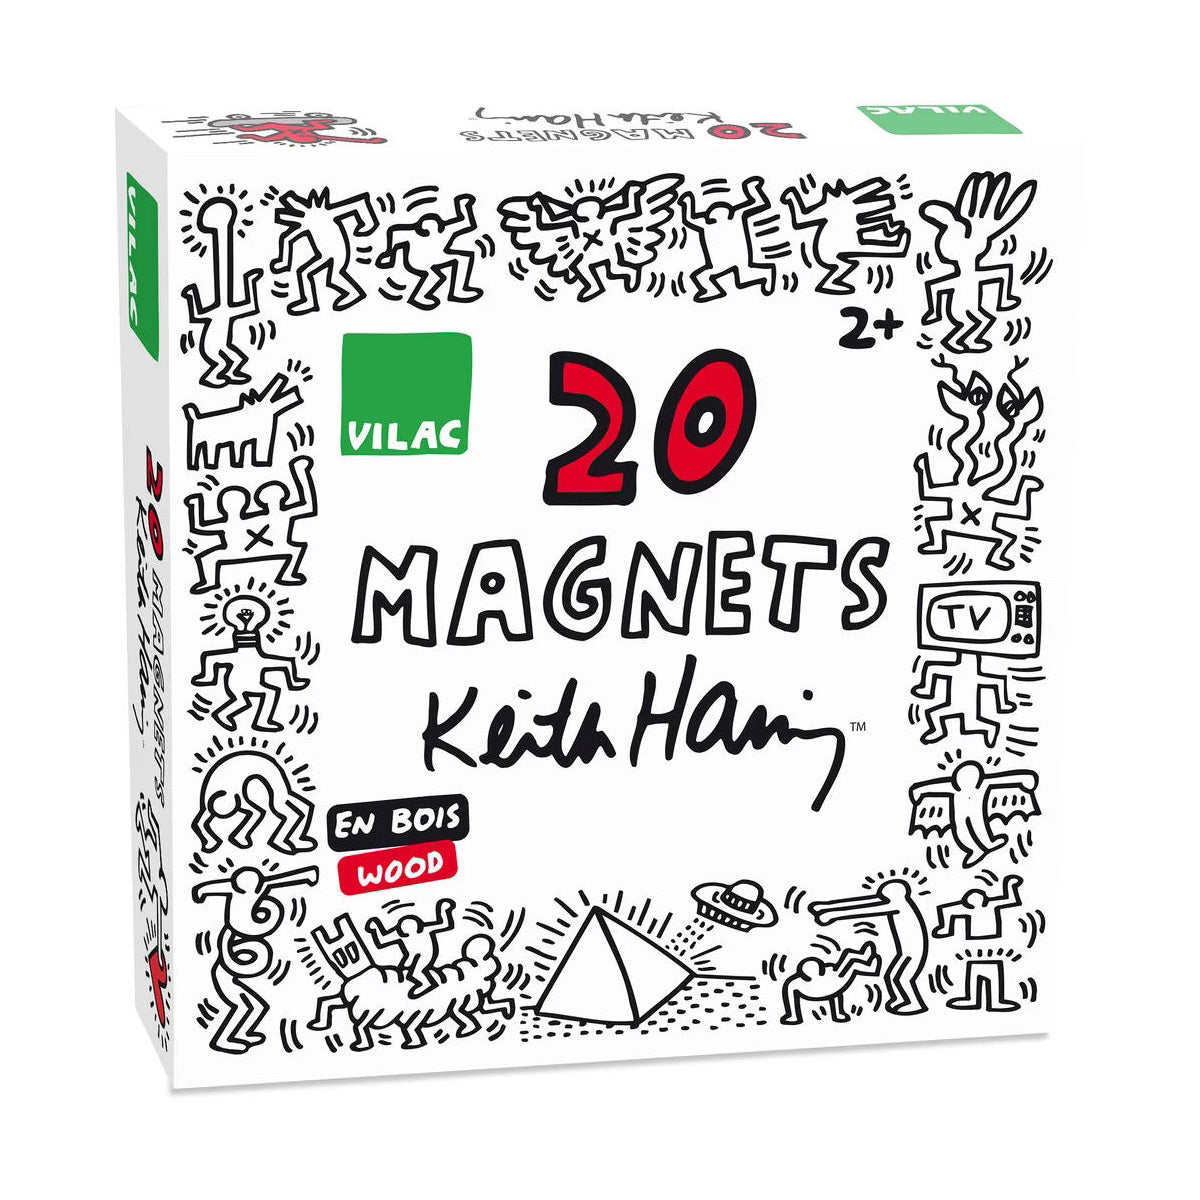 Magnets Set - Keith Haring